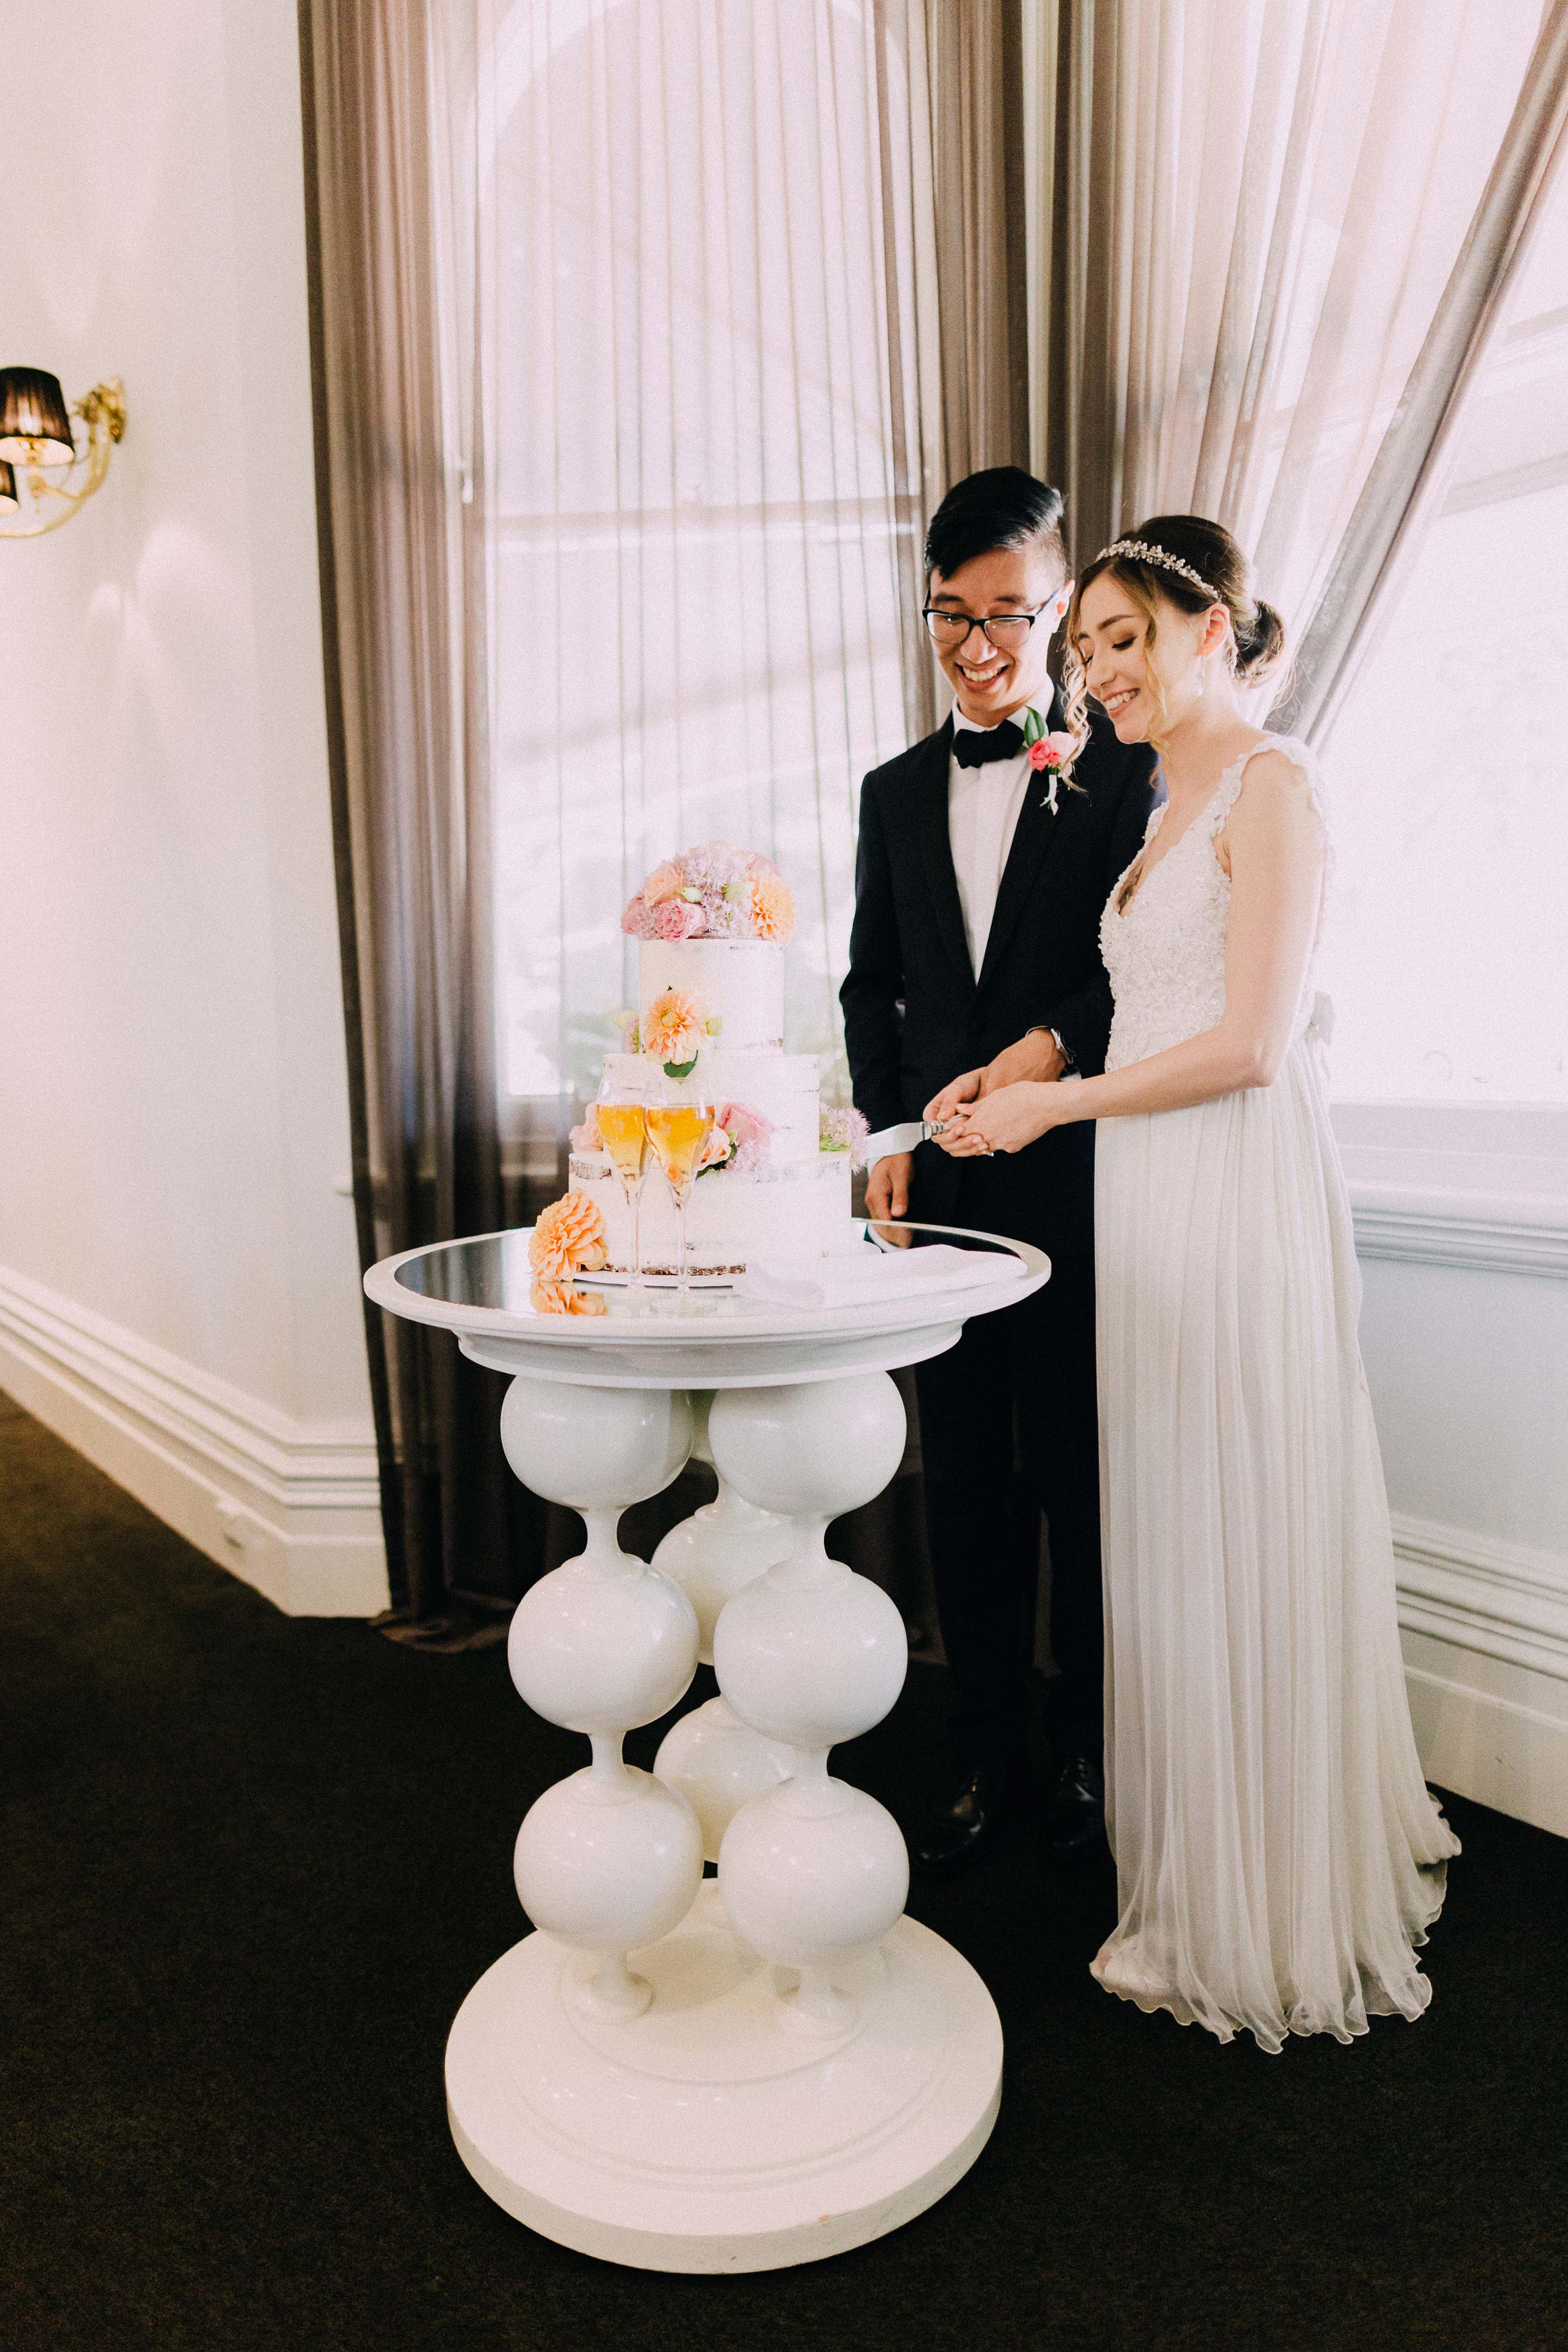 Melbourne-ripponlea-wedding-photographer-quat-quatta-lunch-reception-cake